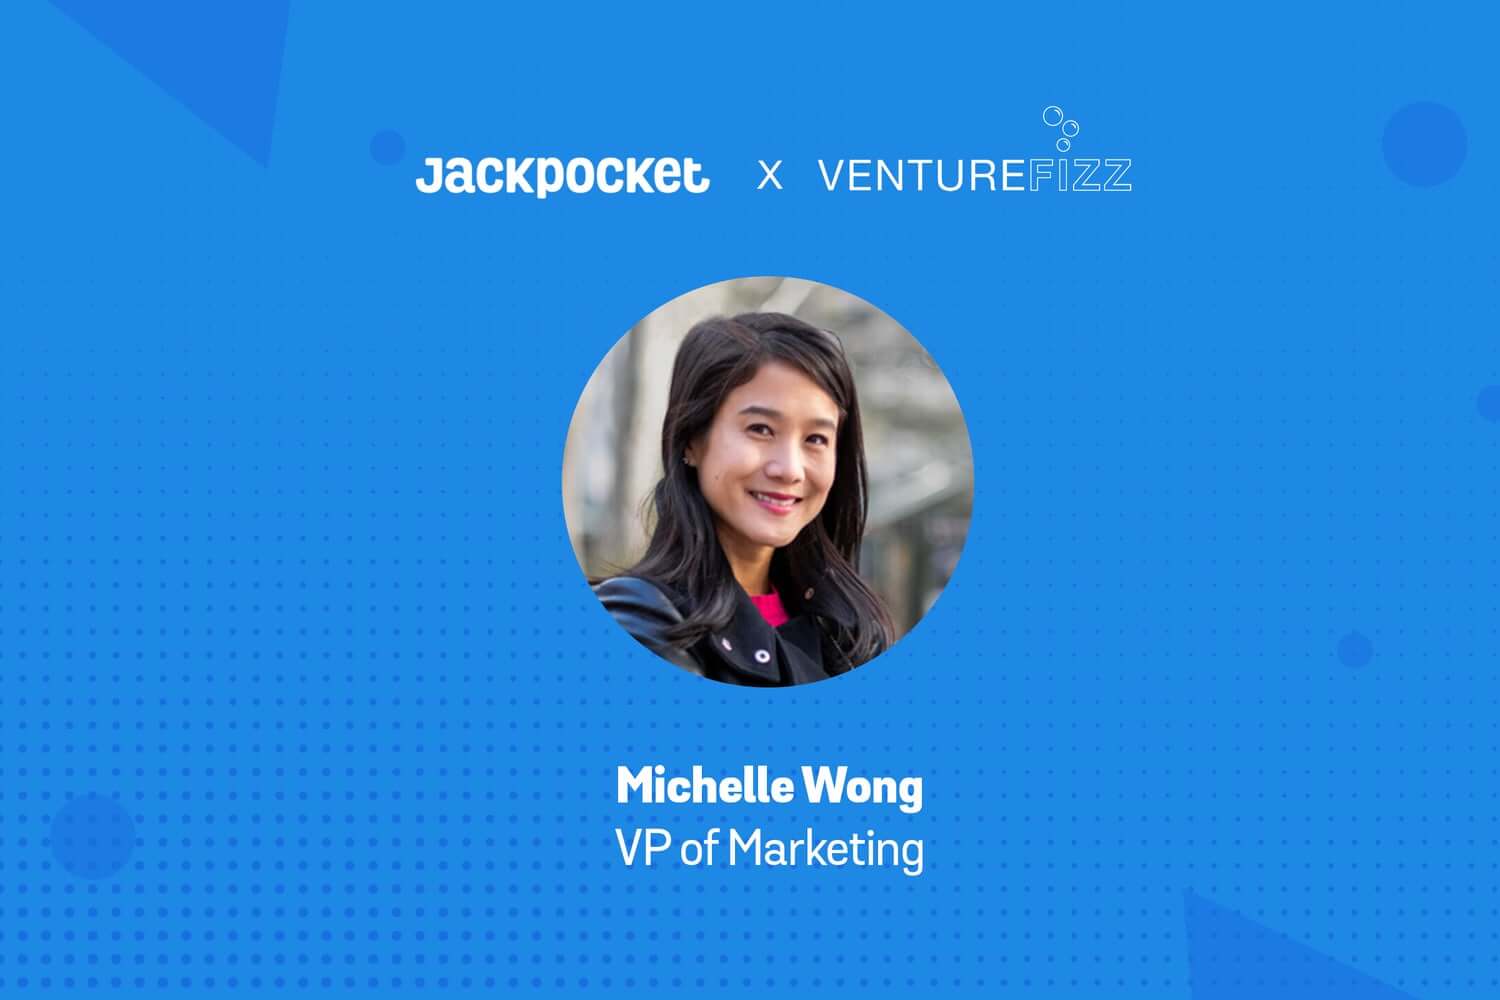 Michelle Wong VP of Marketing at Jackpocket